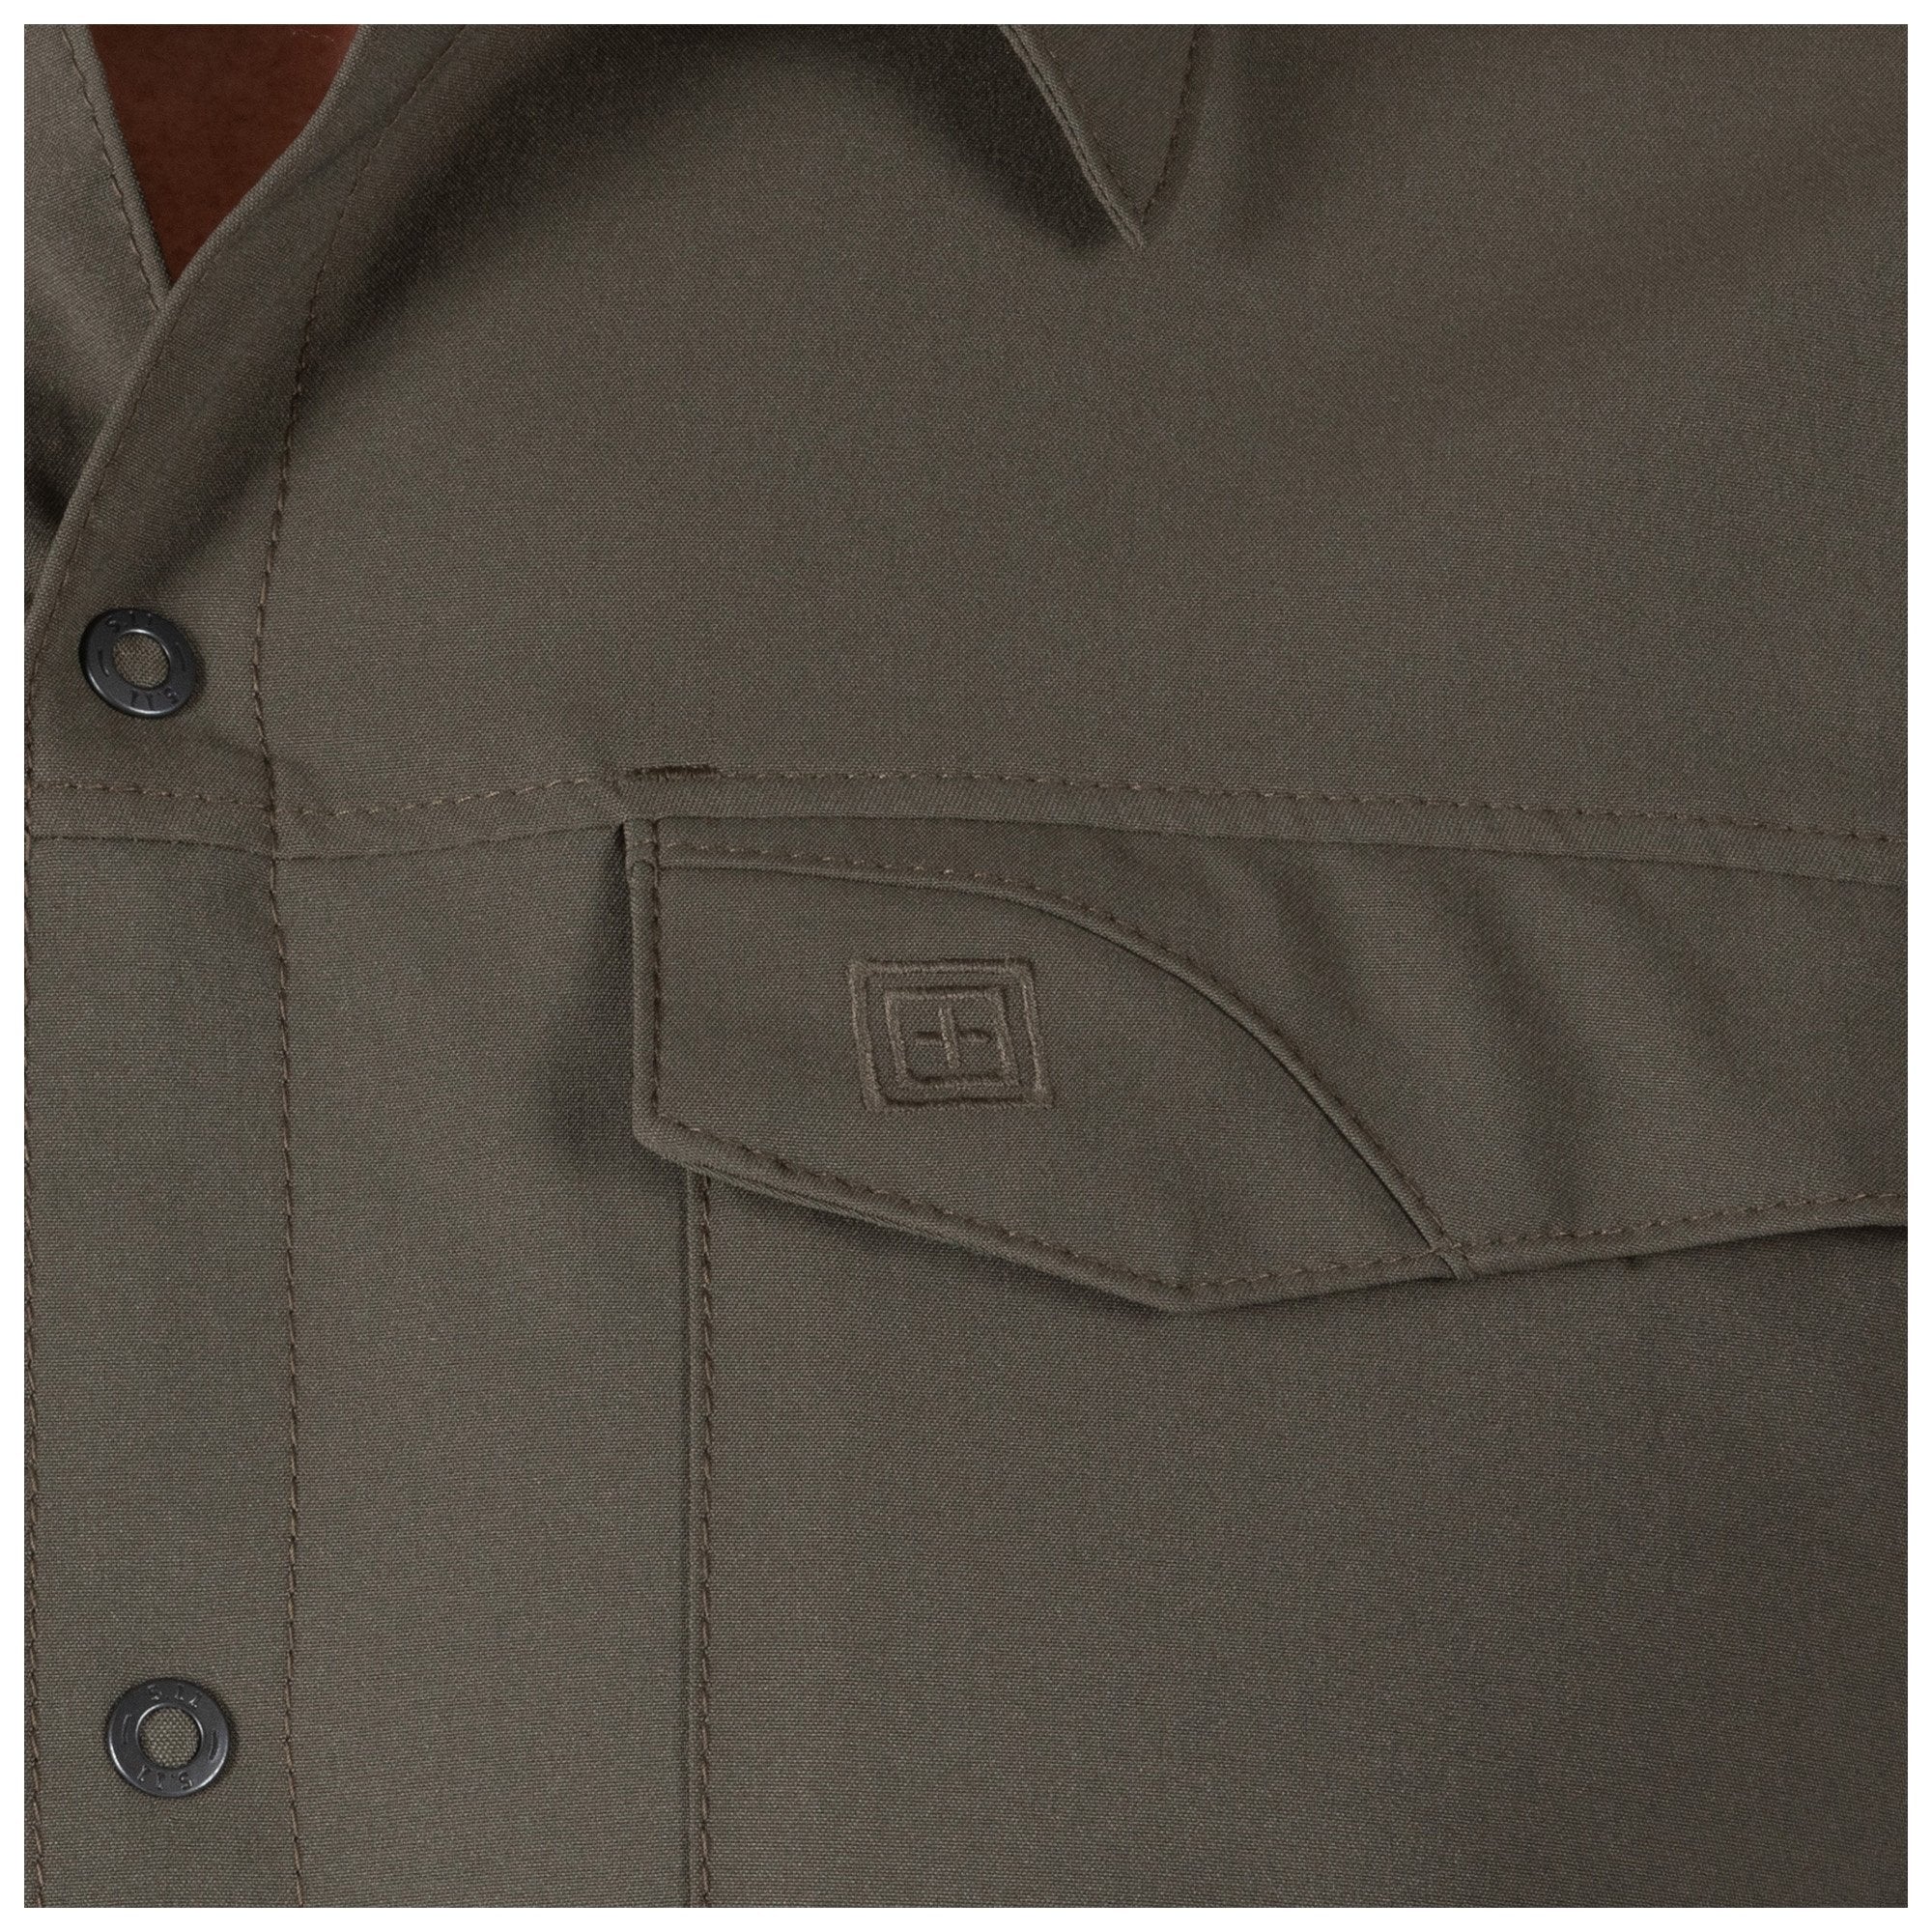 5.11 Freedom Flex Woven Long Sleeve Shirt Sage Green Shirts 5.11 Tactical Tactical Gear Supplier Tactical Distributors Australia